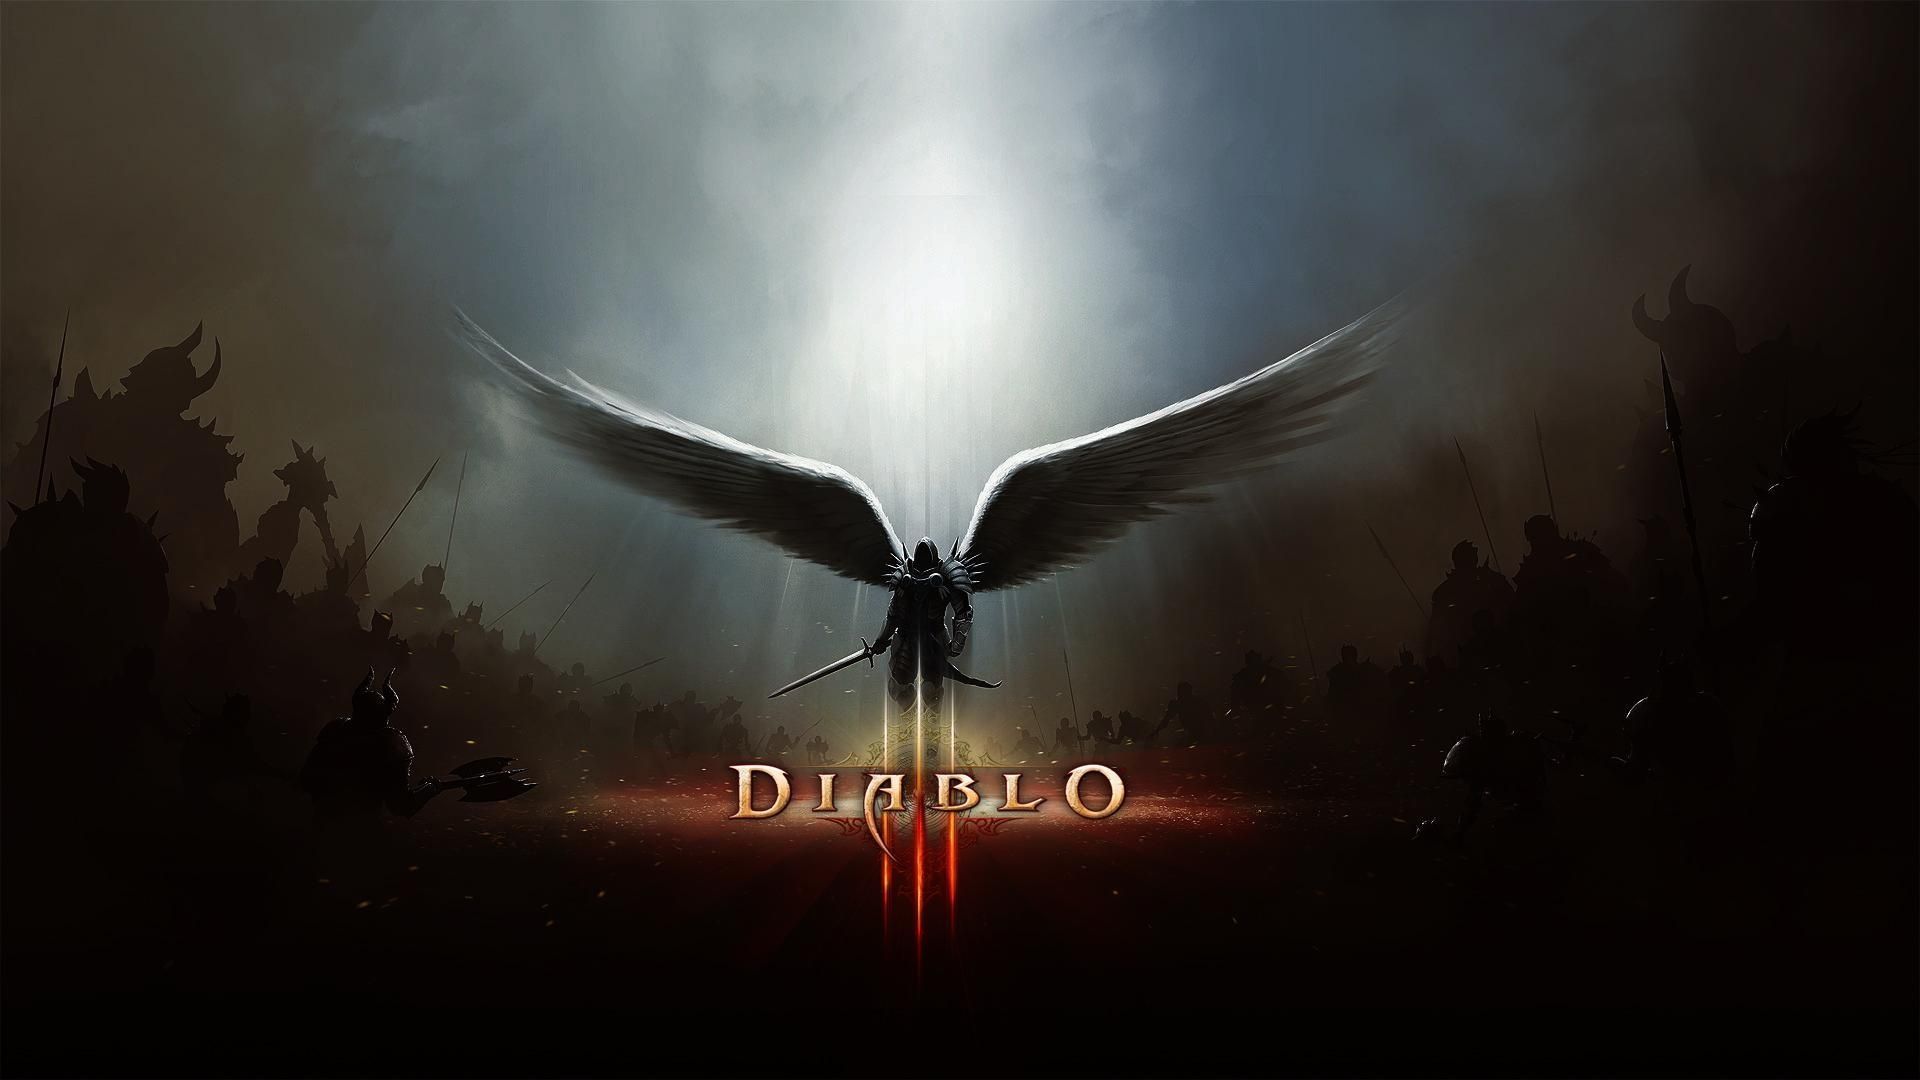 Diablo 3 HD wallpapers free download